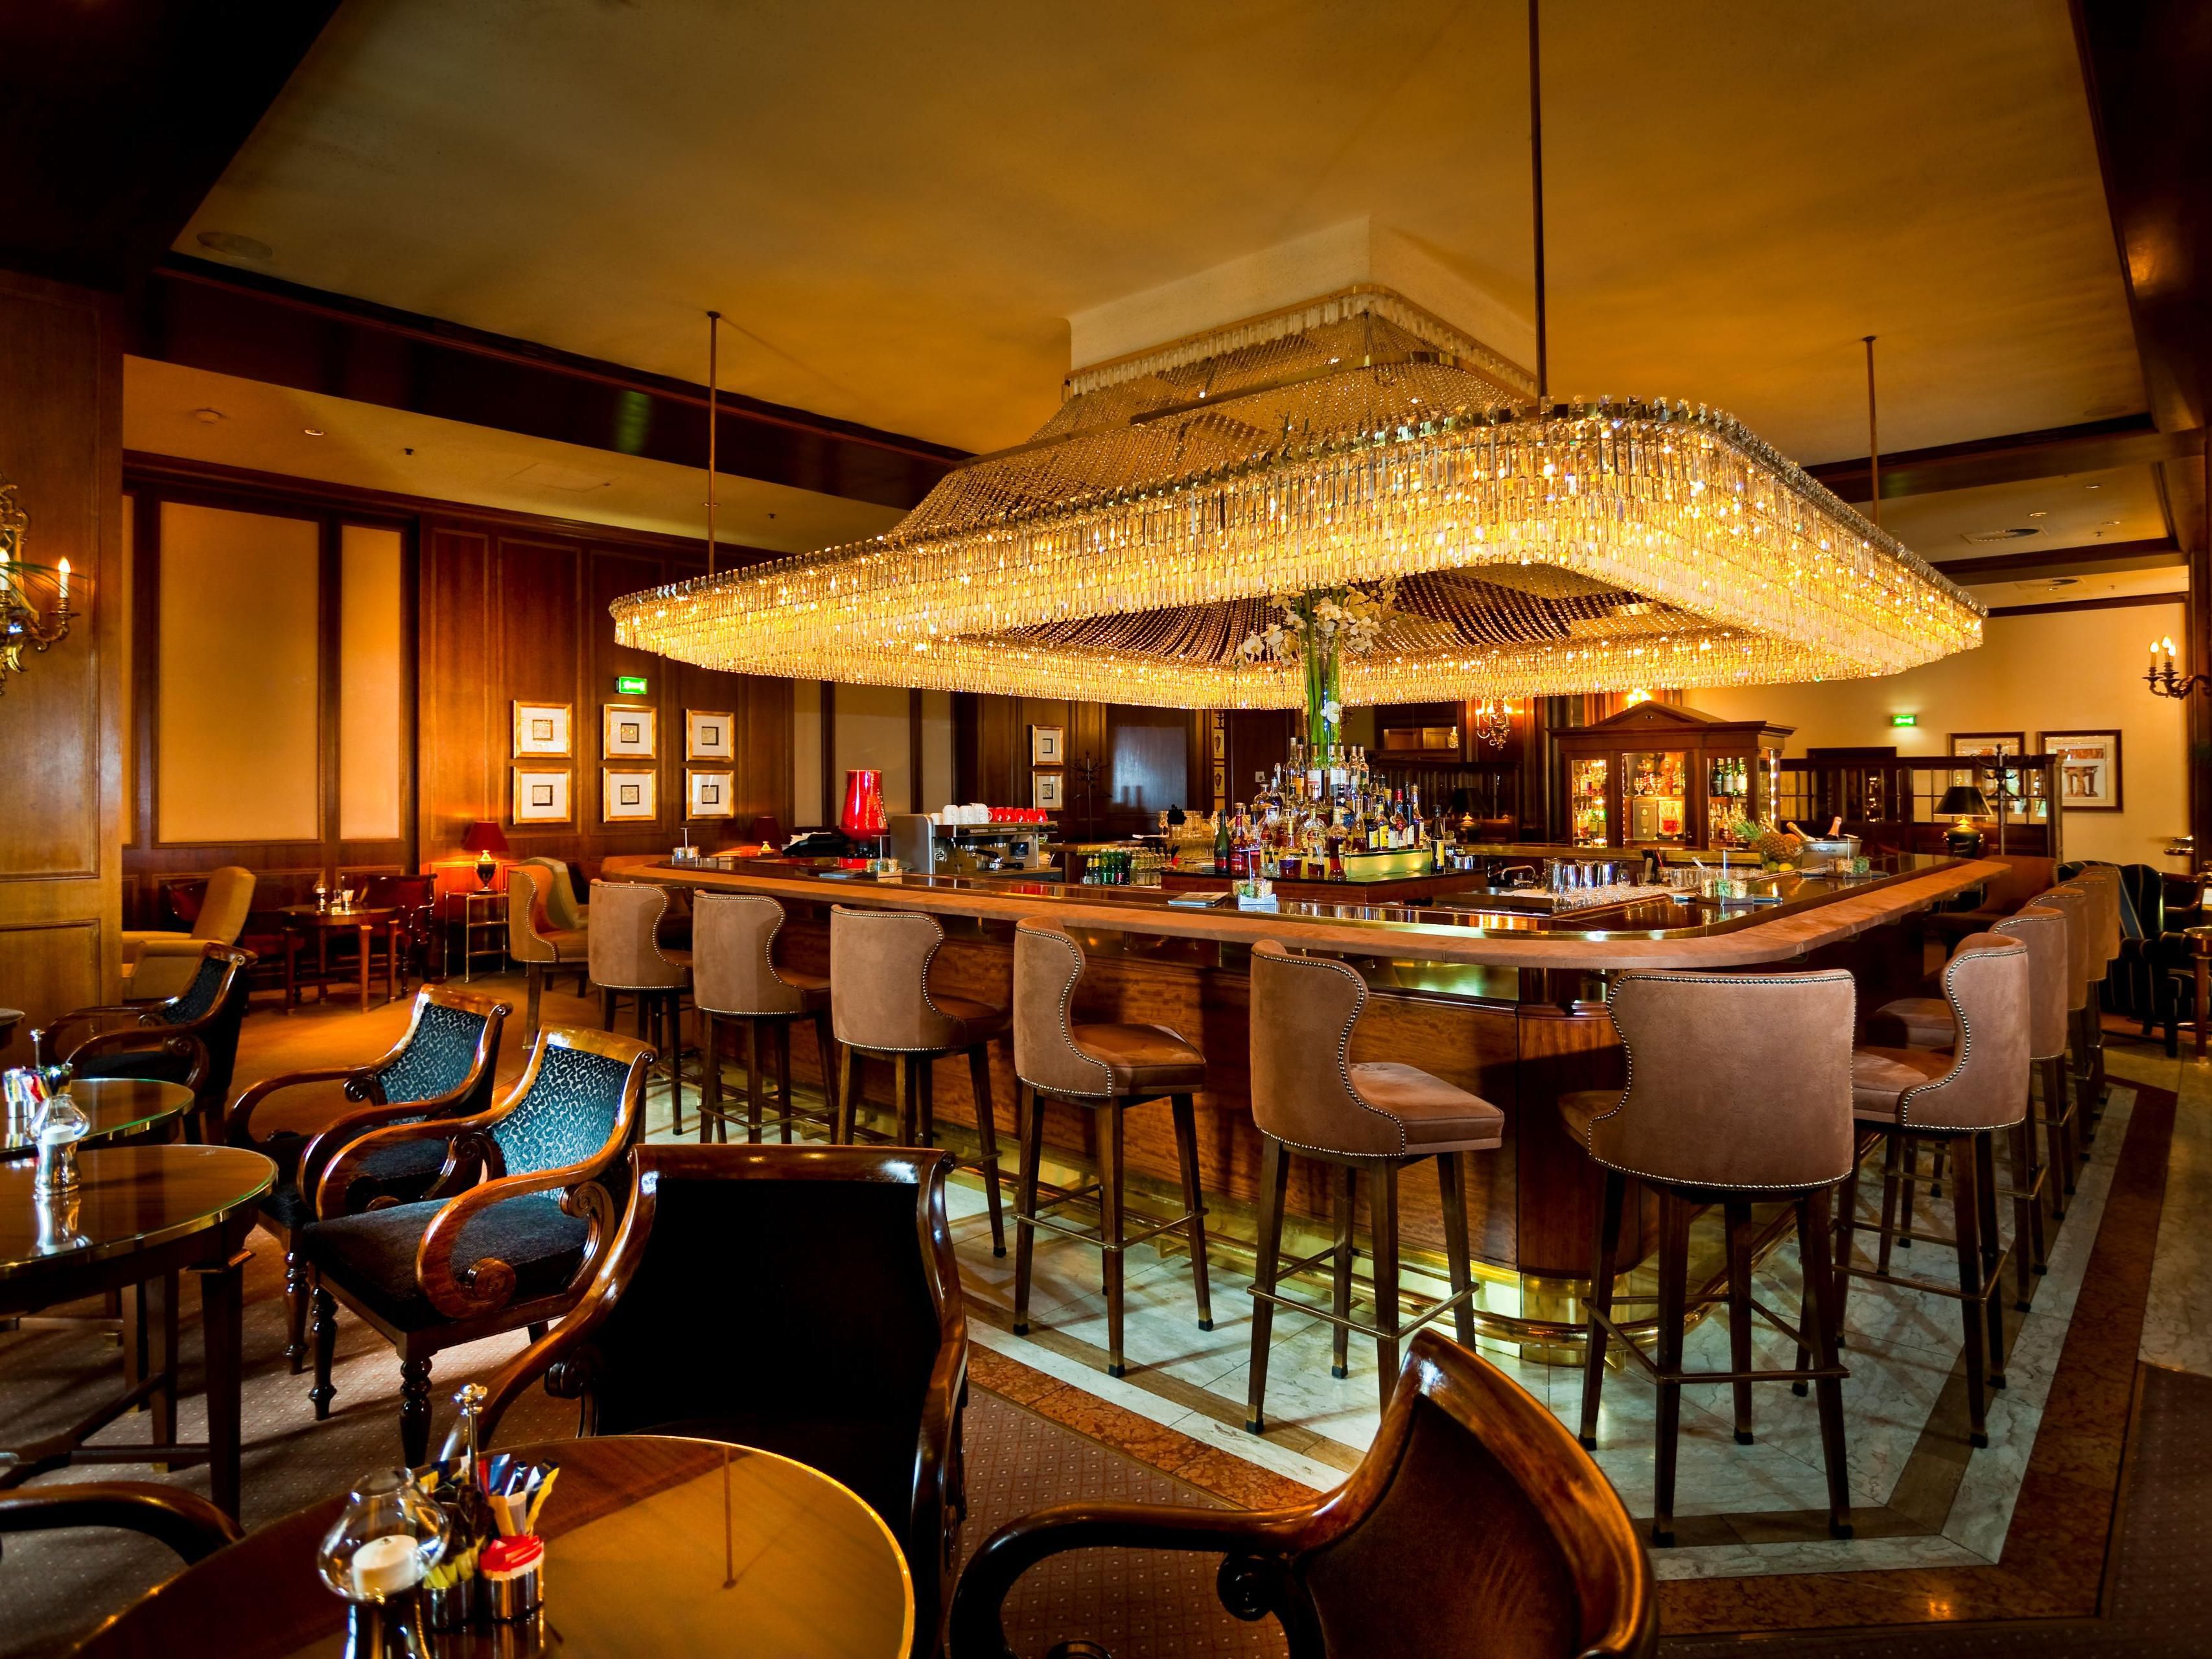 The legendary Intermezzo Bar with its impressive chandelier